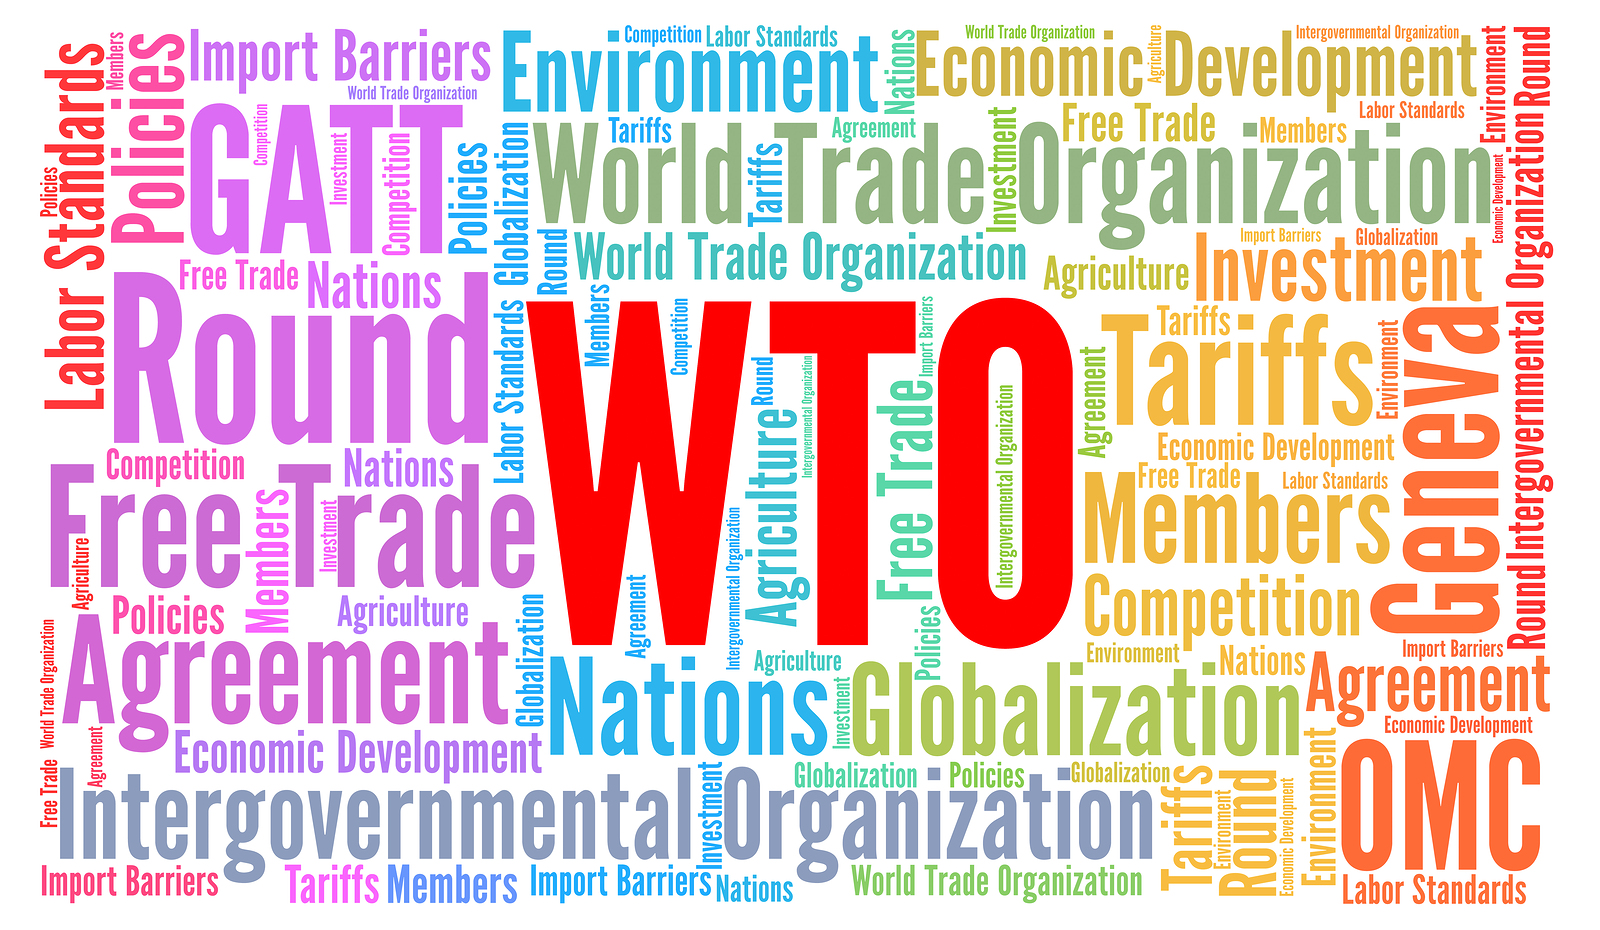 World Trade Organizations